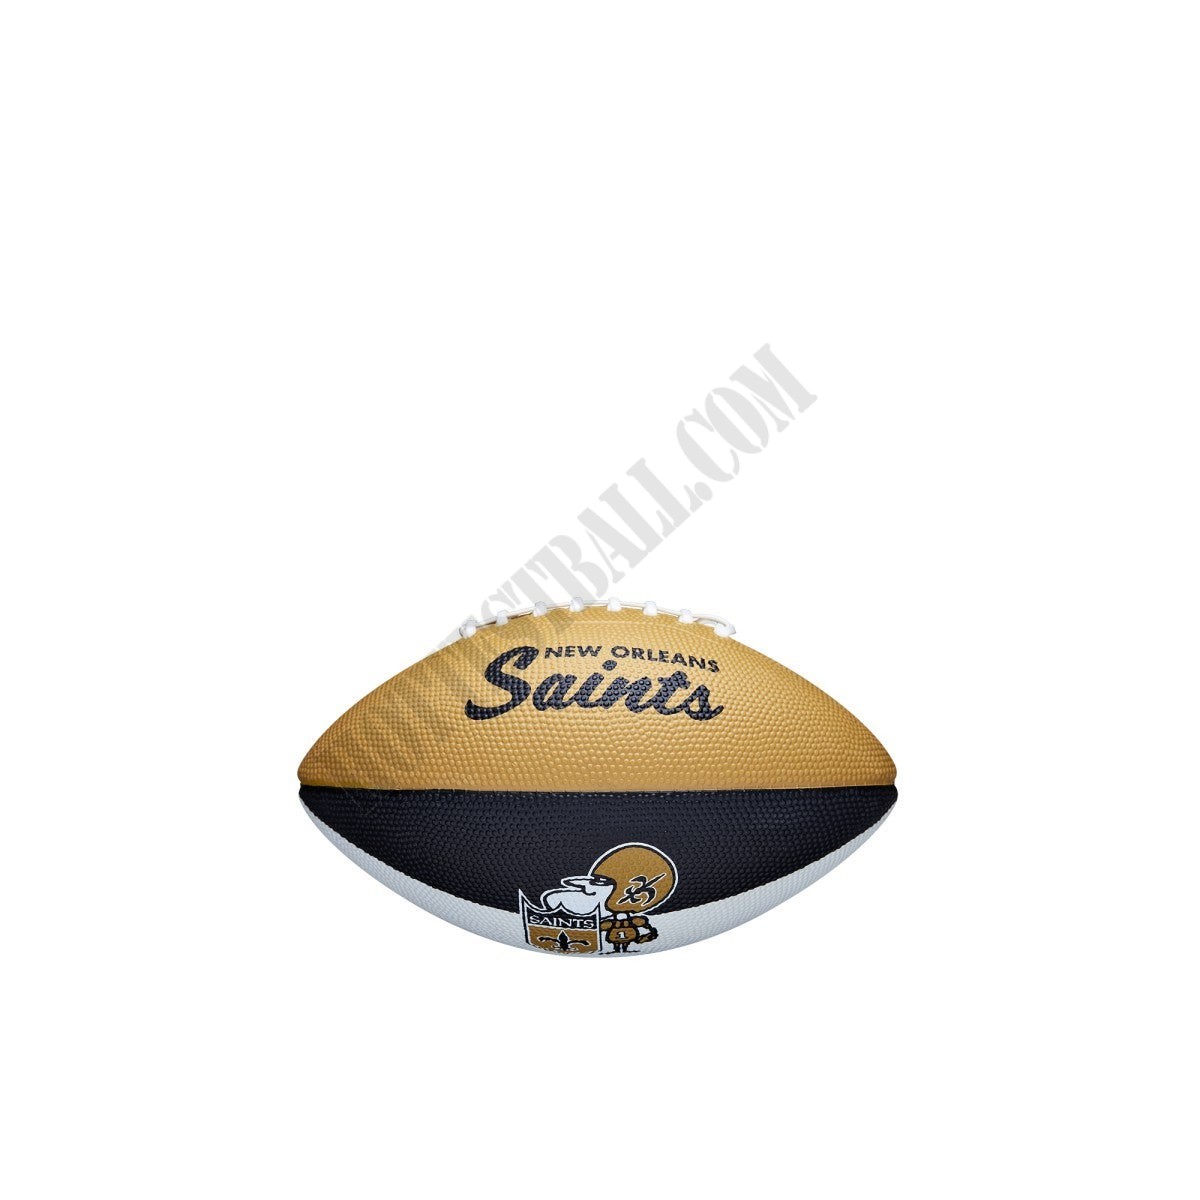 NFL Retro Mini Football - New Orleans Saints ● Wilson Promotions - -4